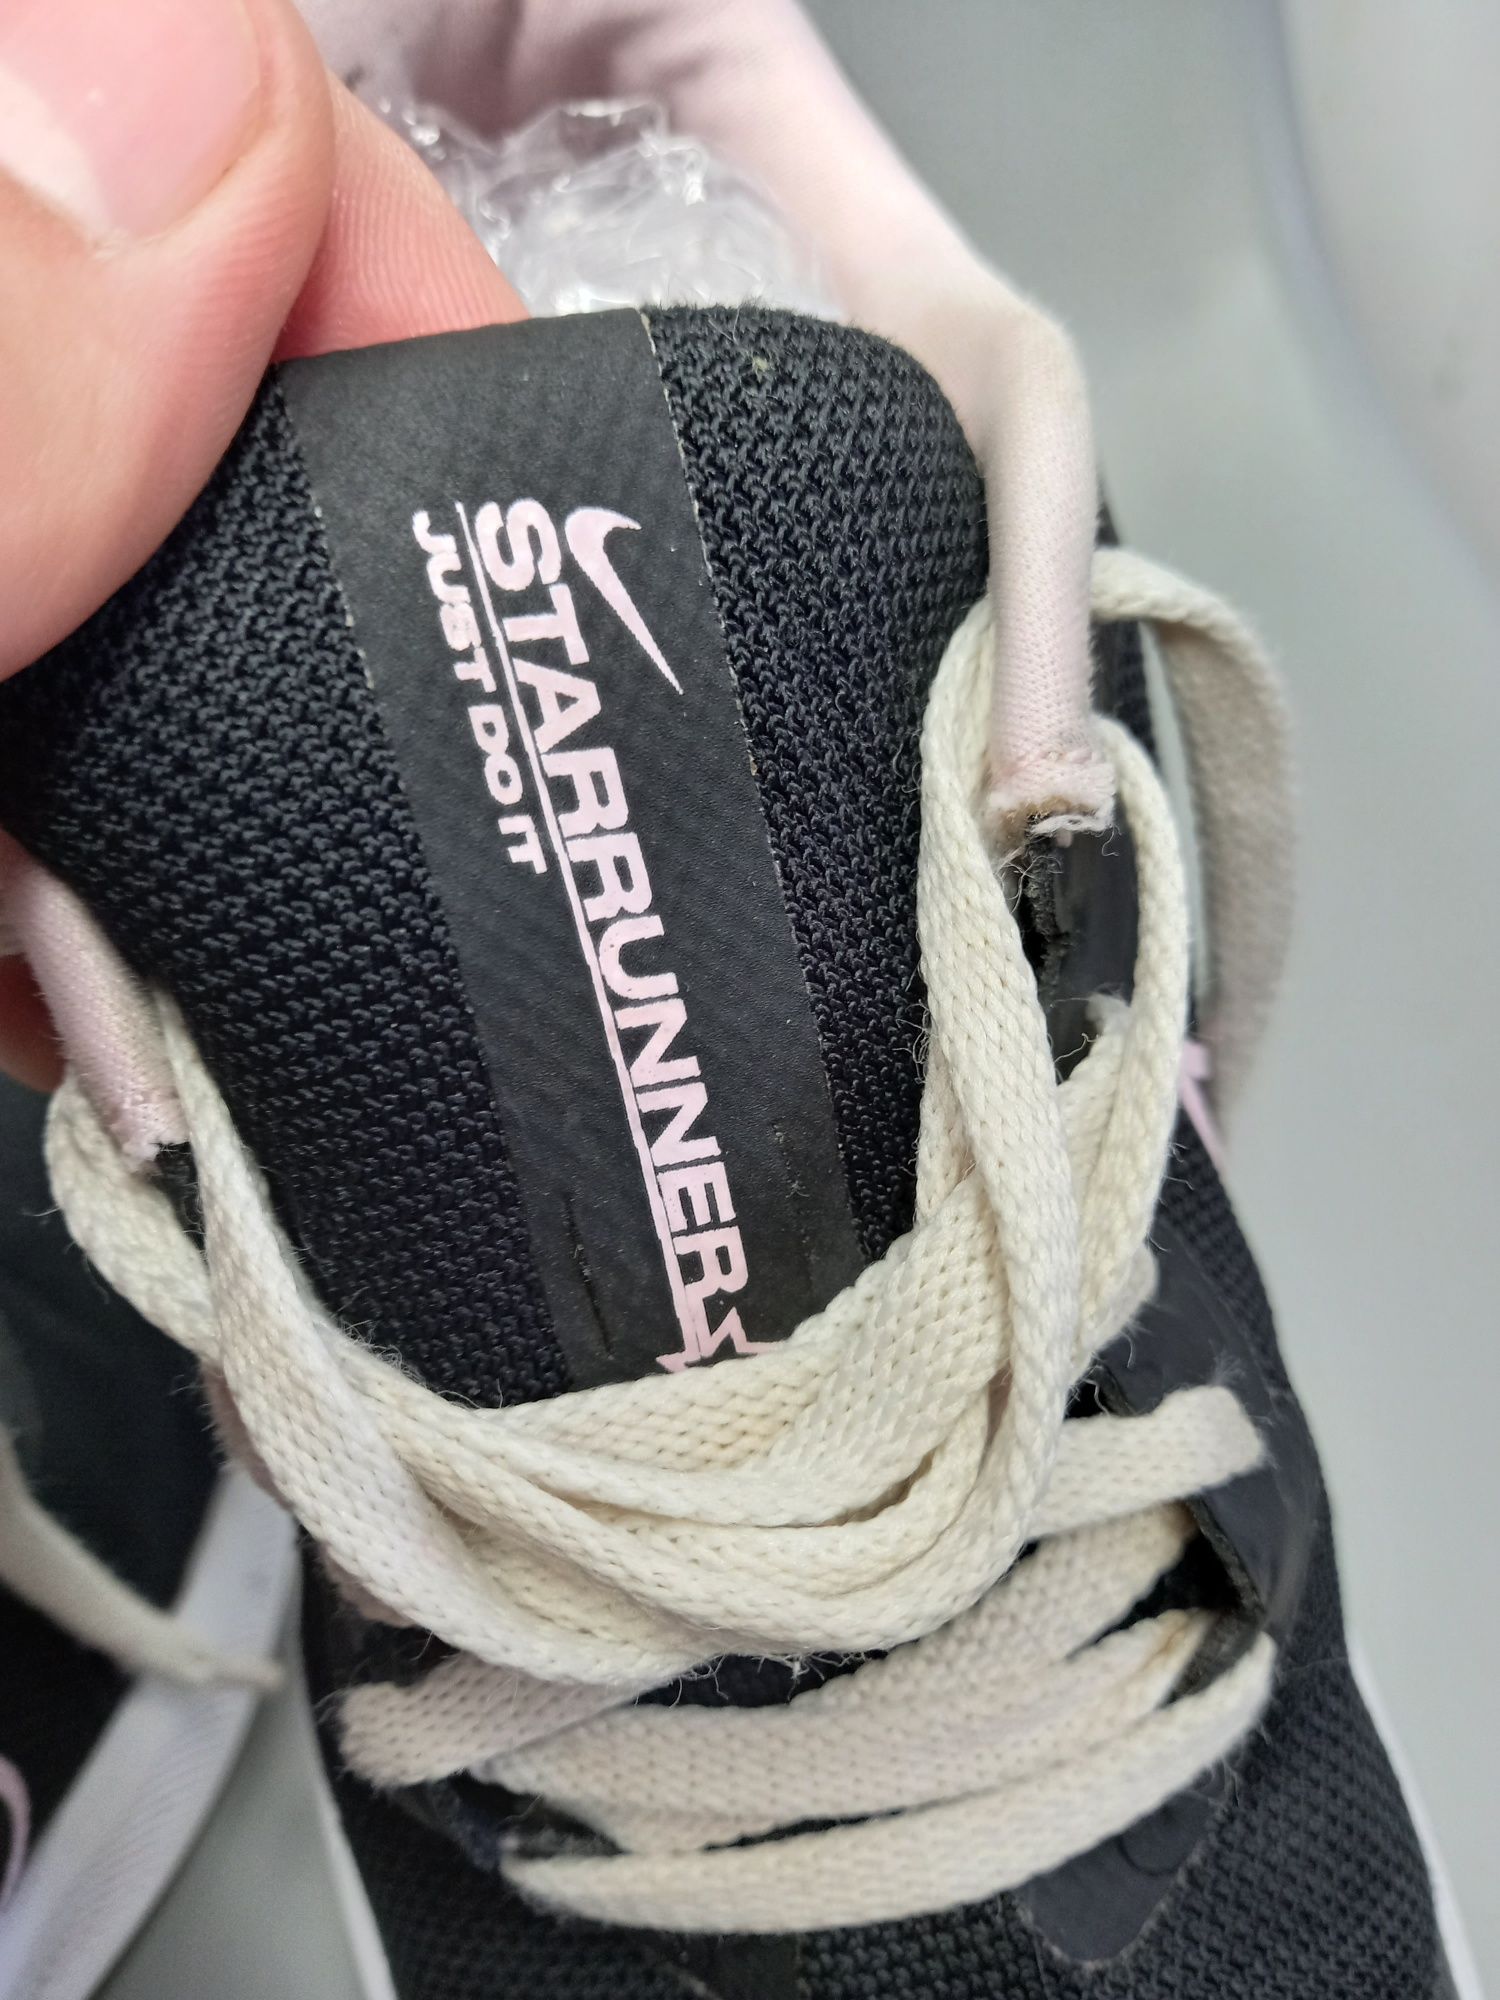 Беговые кроссовки Nike Starrunner 36 размер